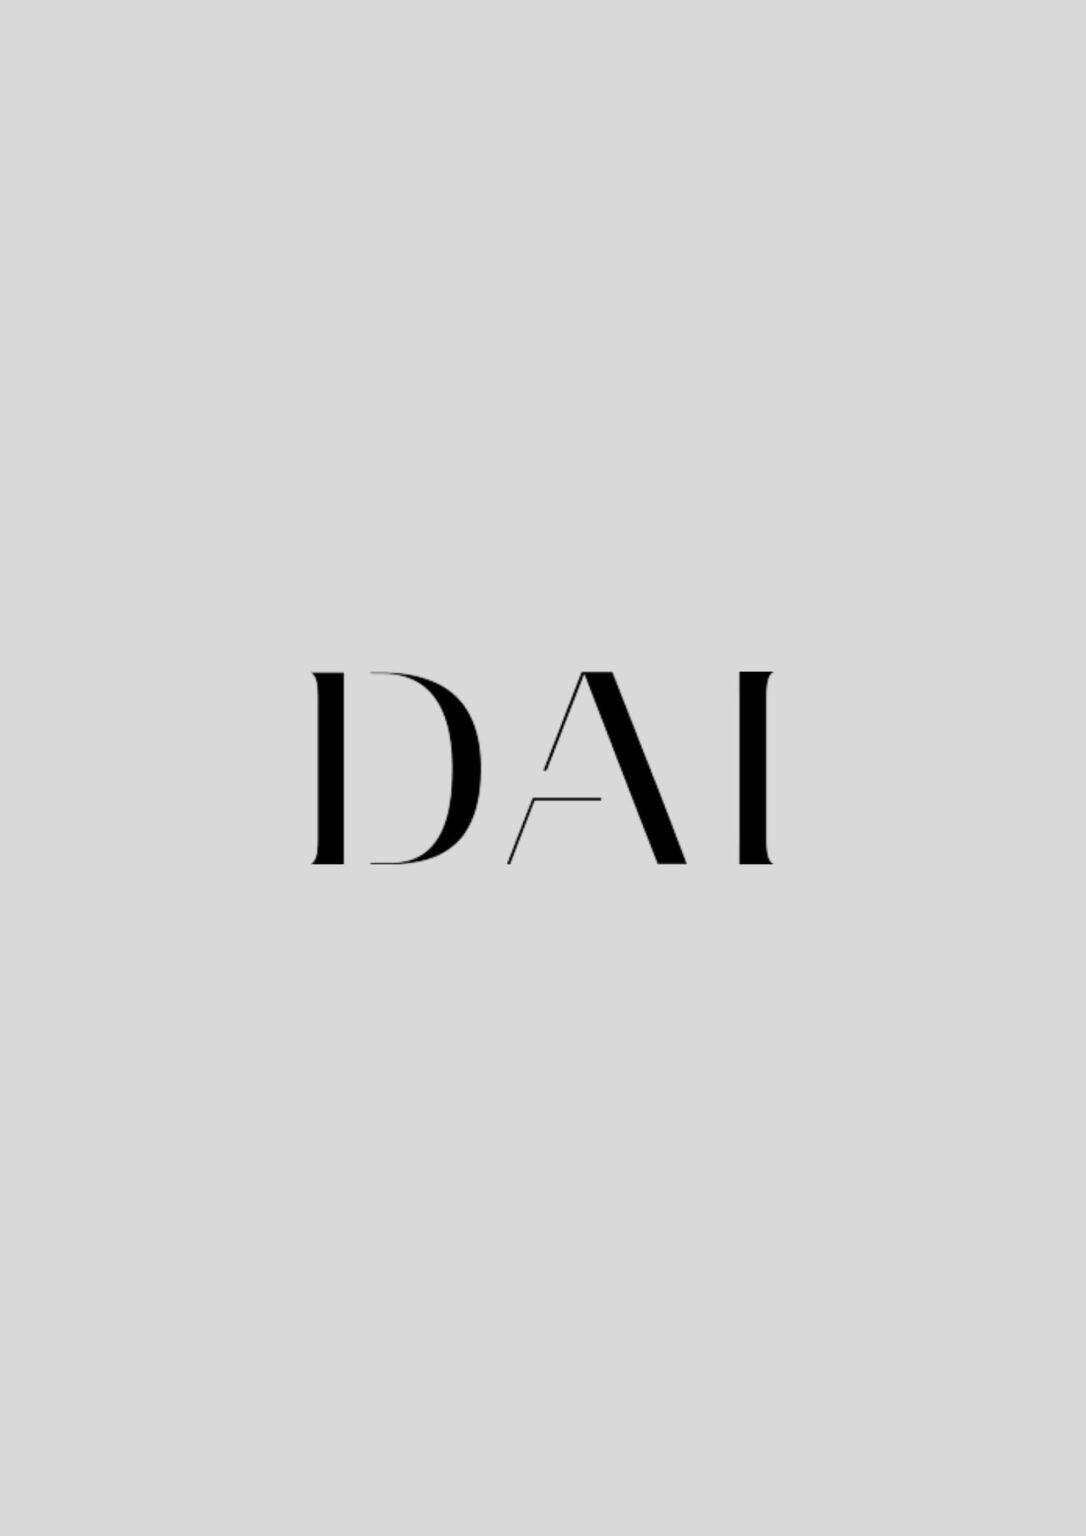 London Fashion Week 2019 wearing Dai